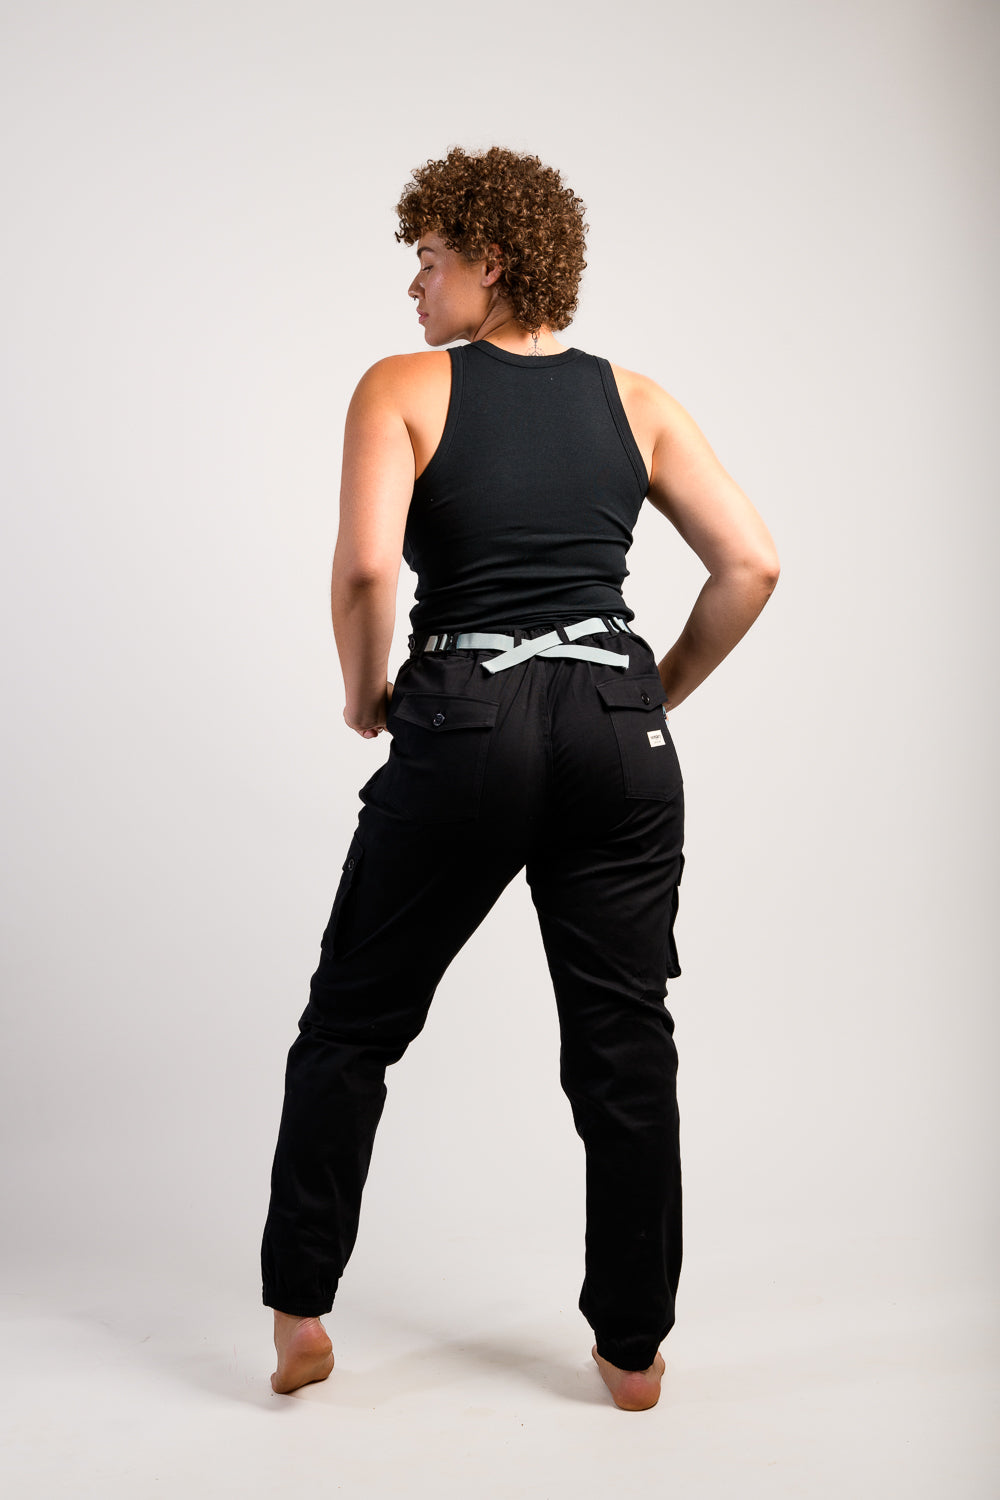 Women's Plus Size Cargo Pants Australia: Utility Pants